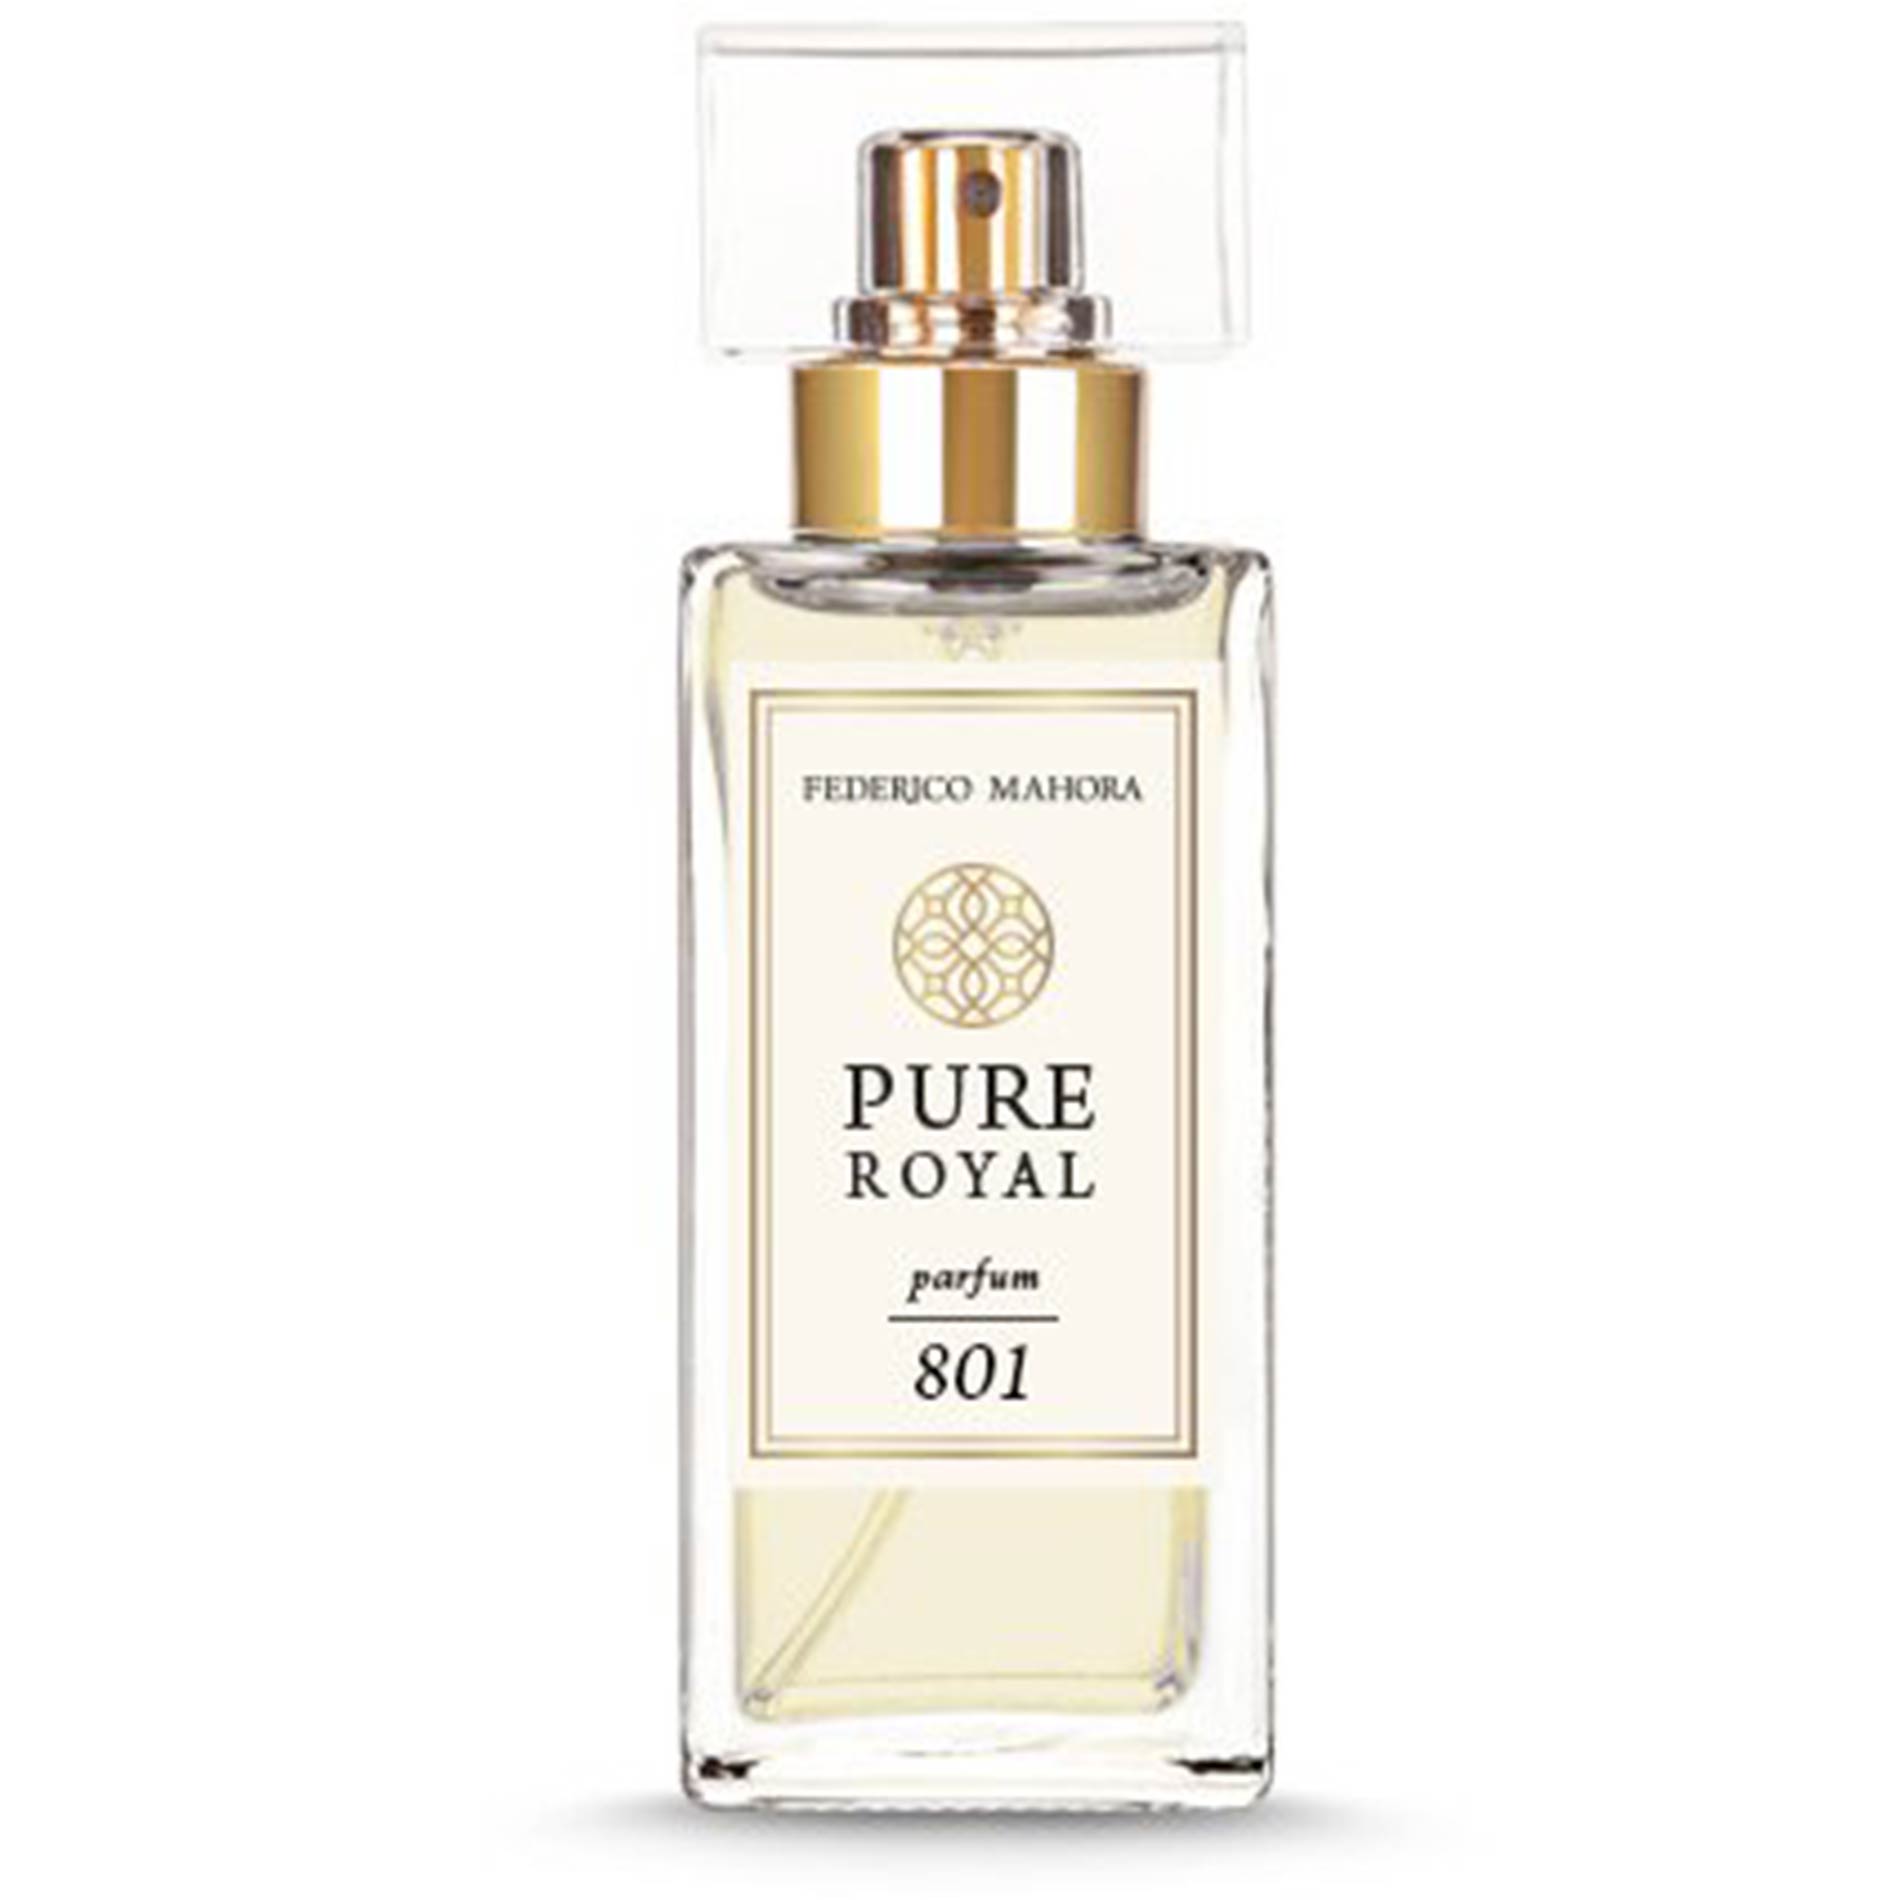 PURE ROYAL 801 Parfum by Federico Mahora